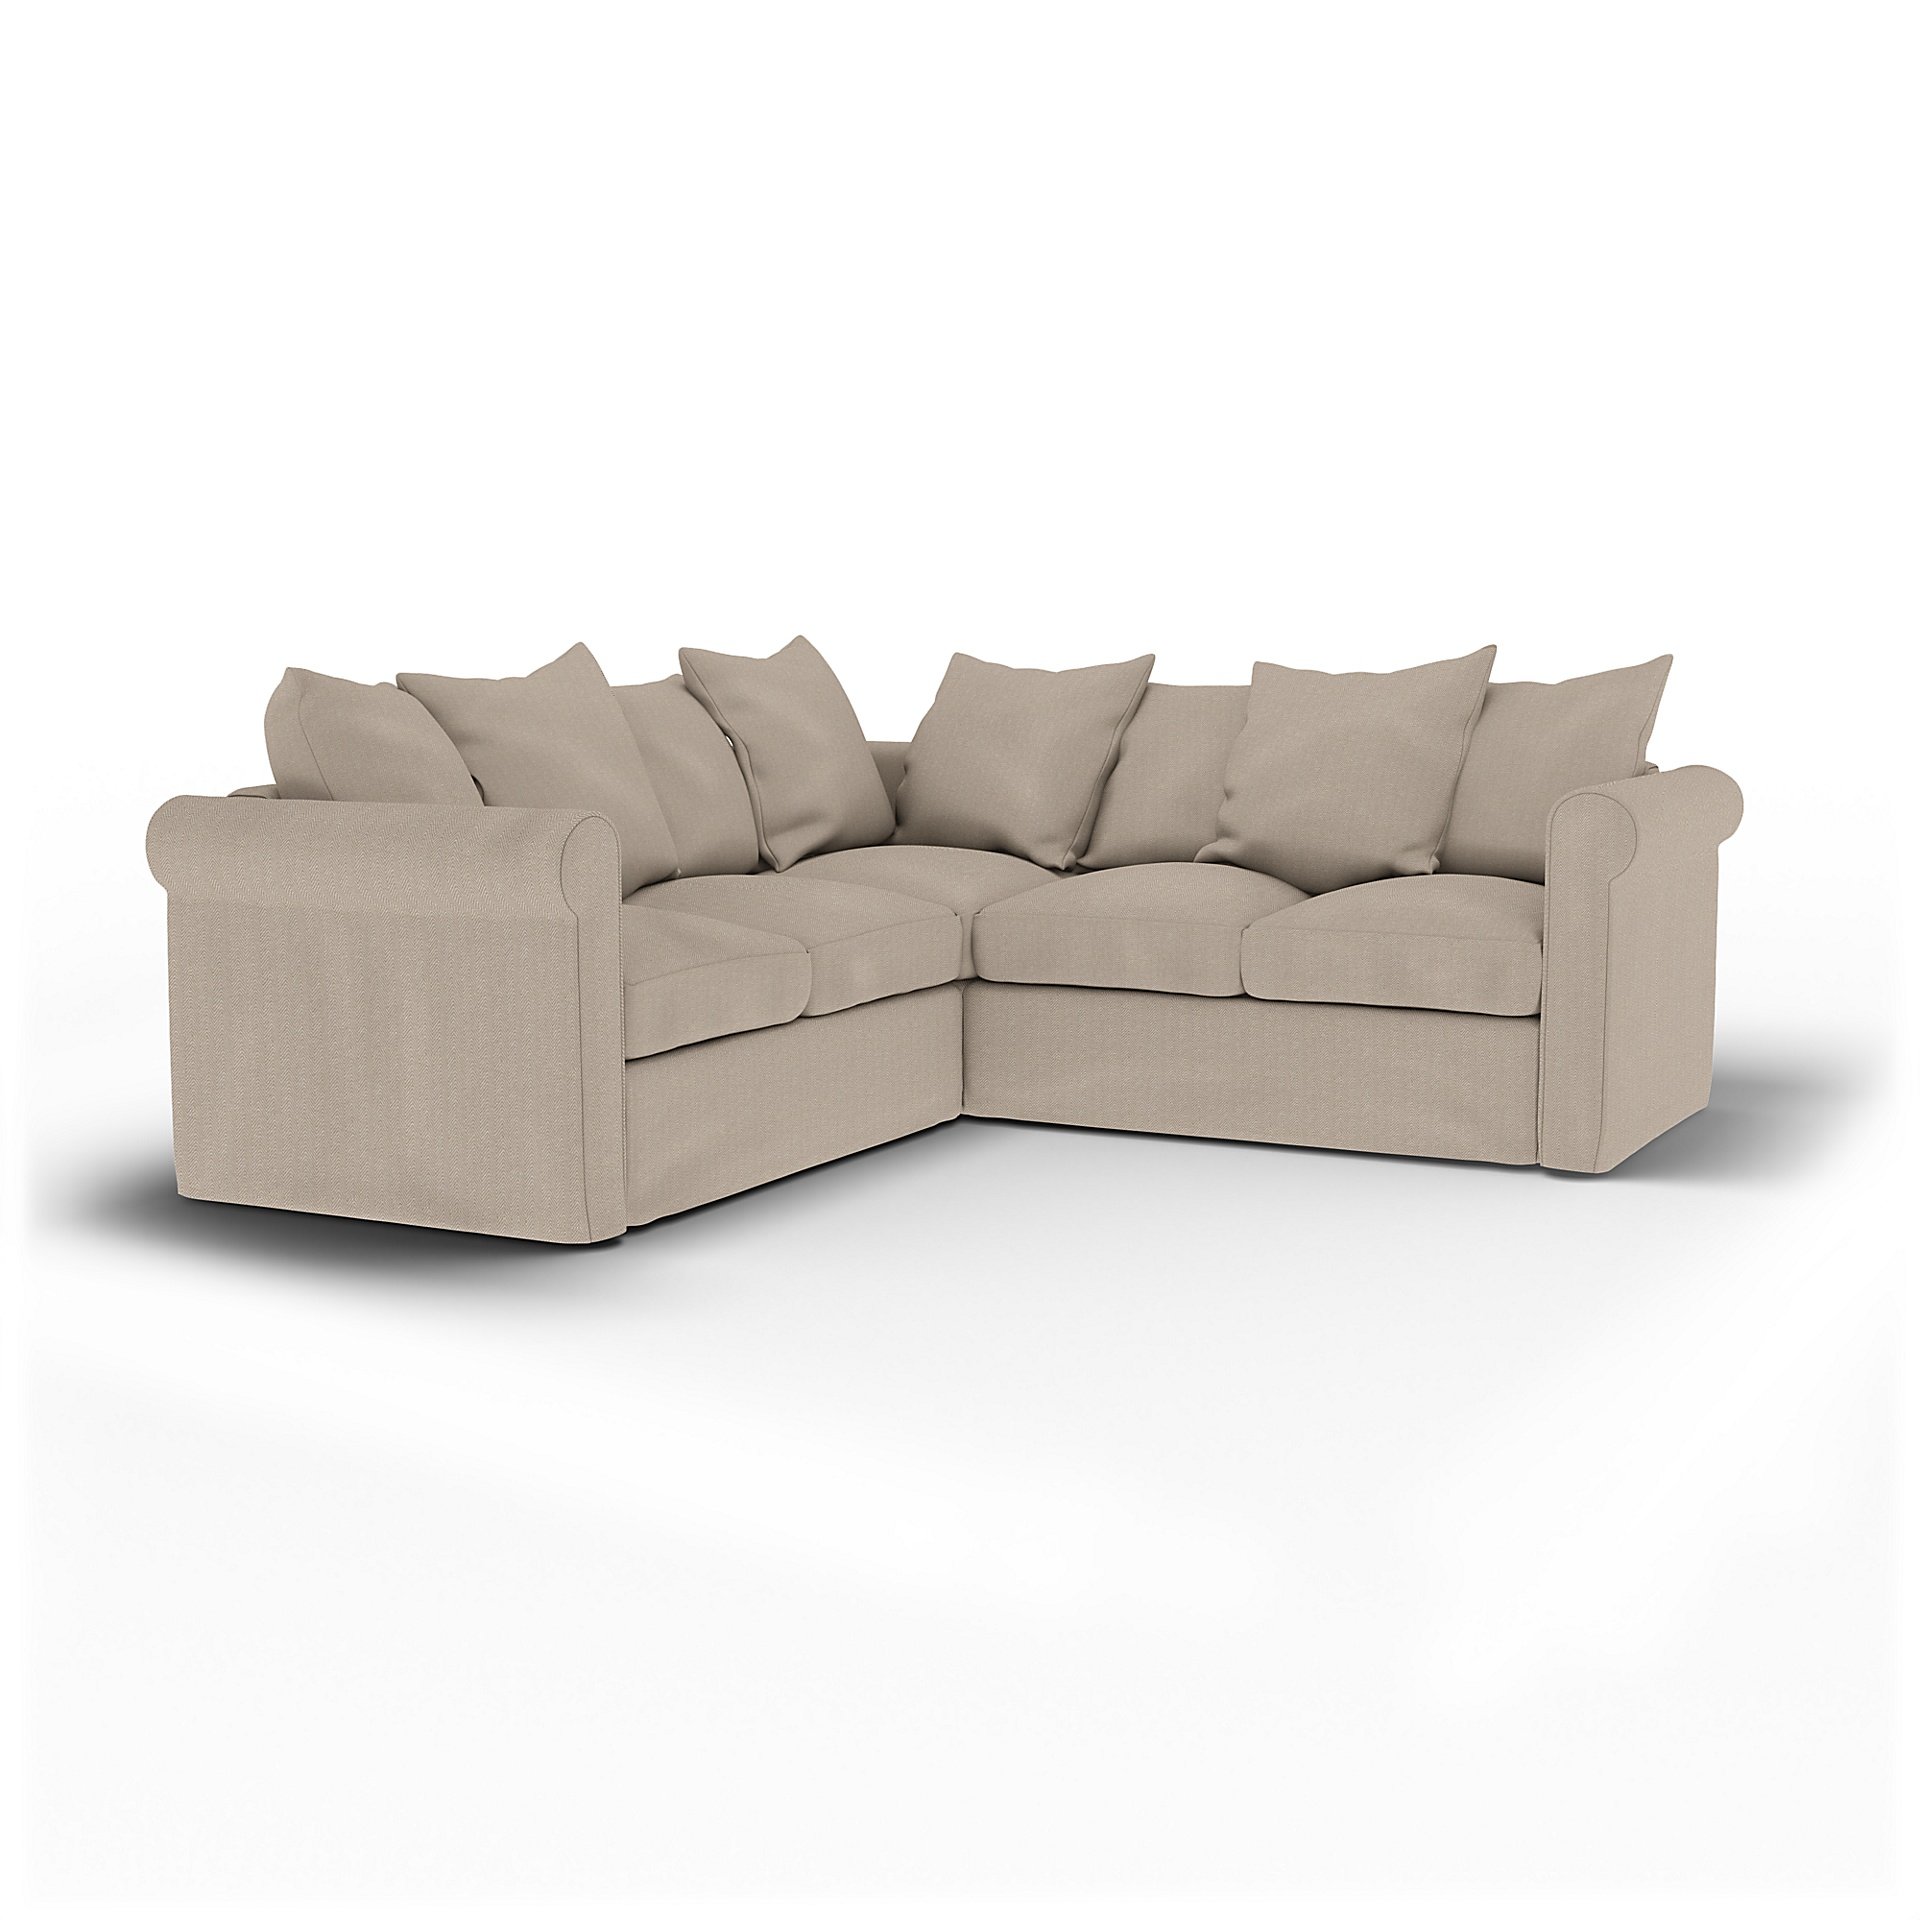 IKEA - Gronlid 4 Seater Corner Sofa Cover, Sand Beige, Cotton - Bemz